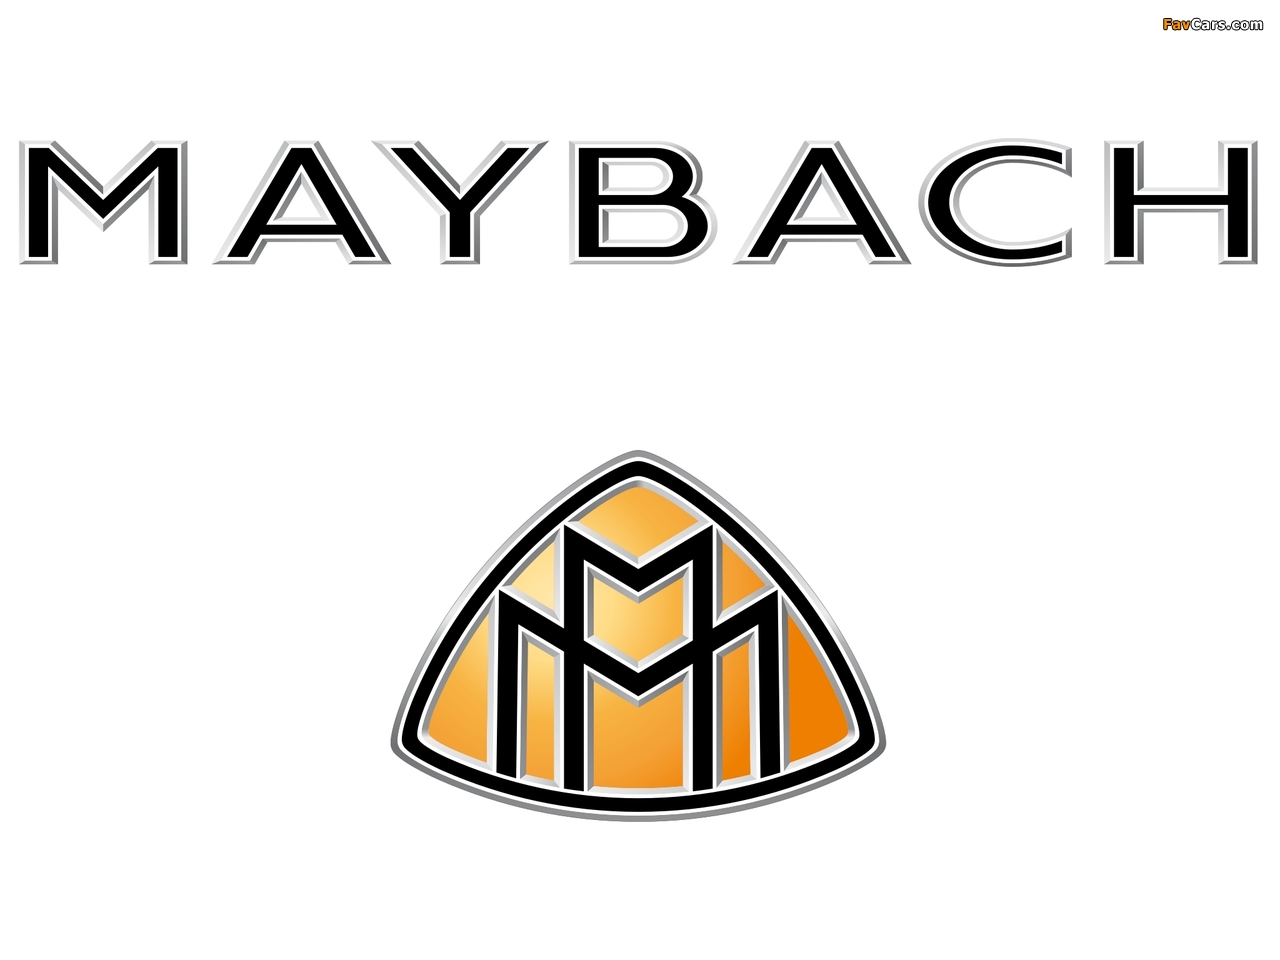 Maybach images (1280 x 960)